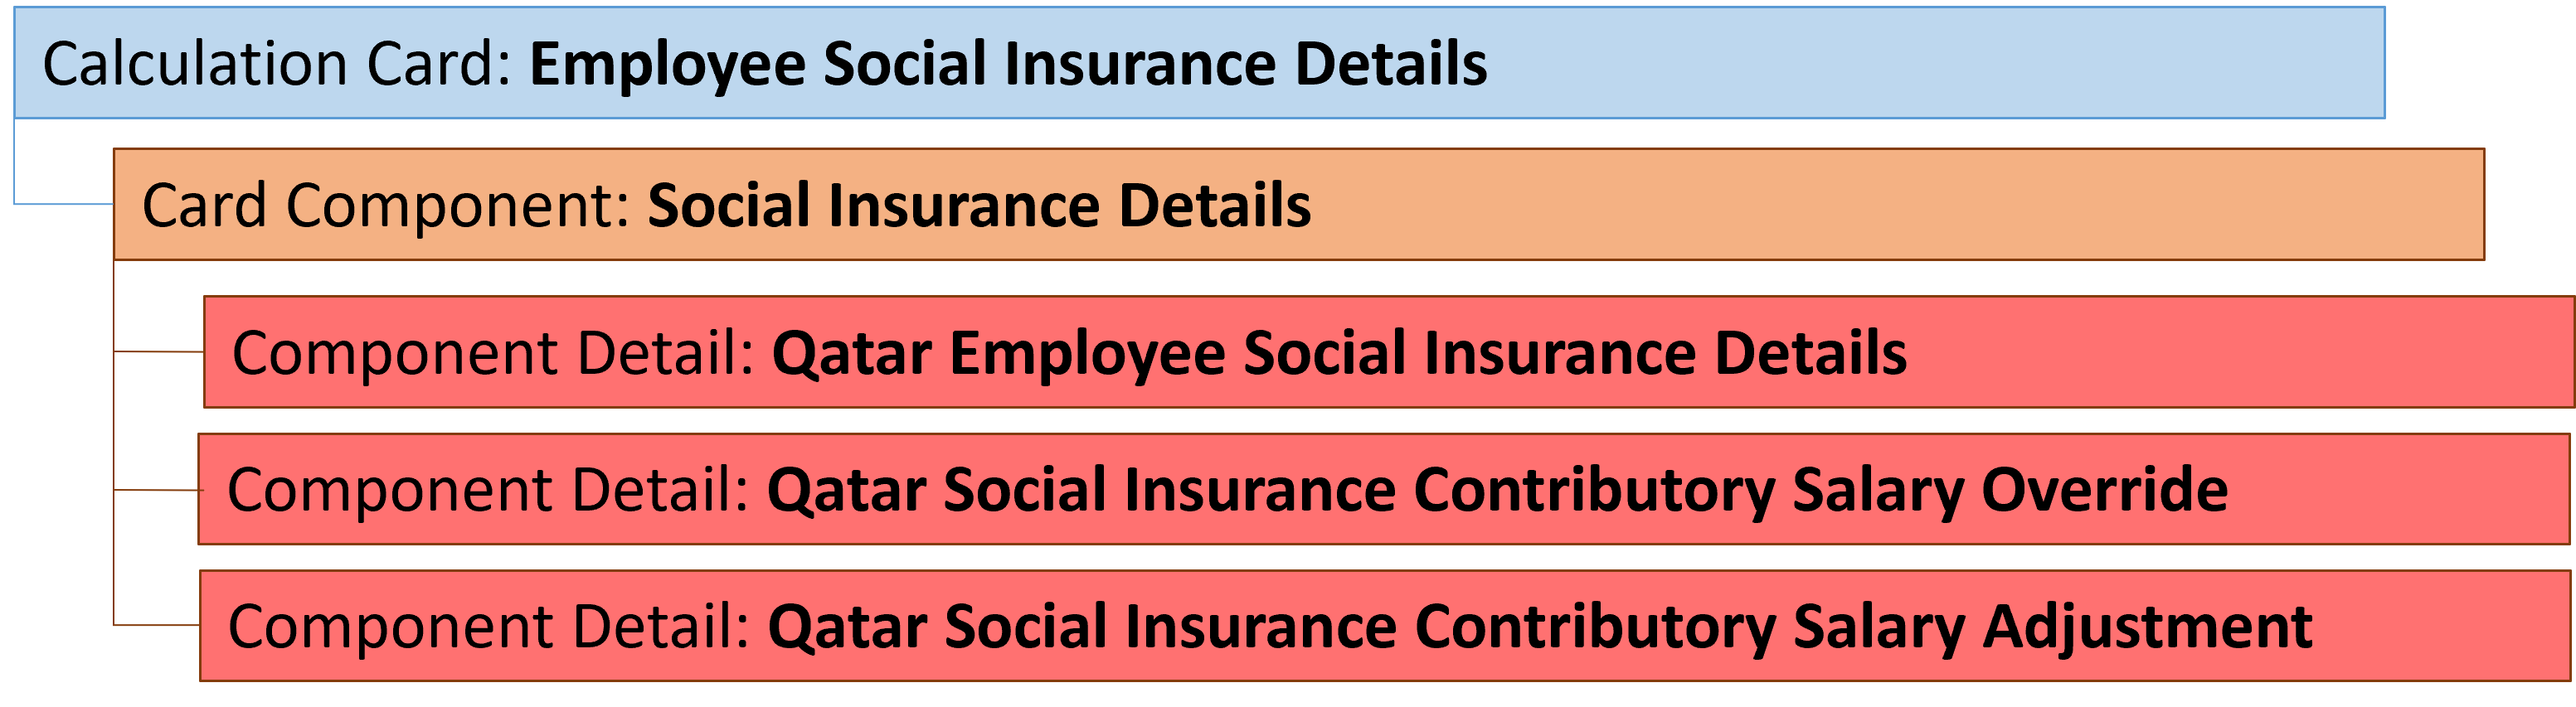 qa employee social insurance details component details